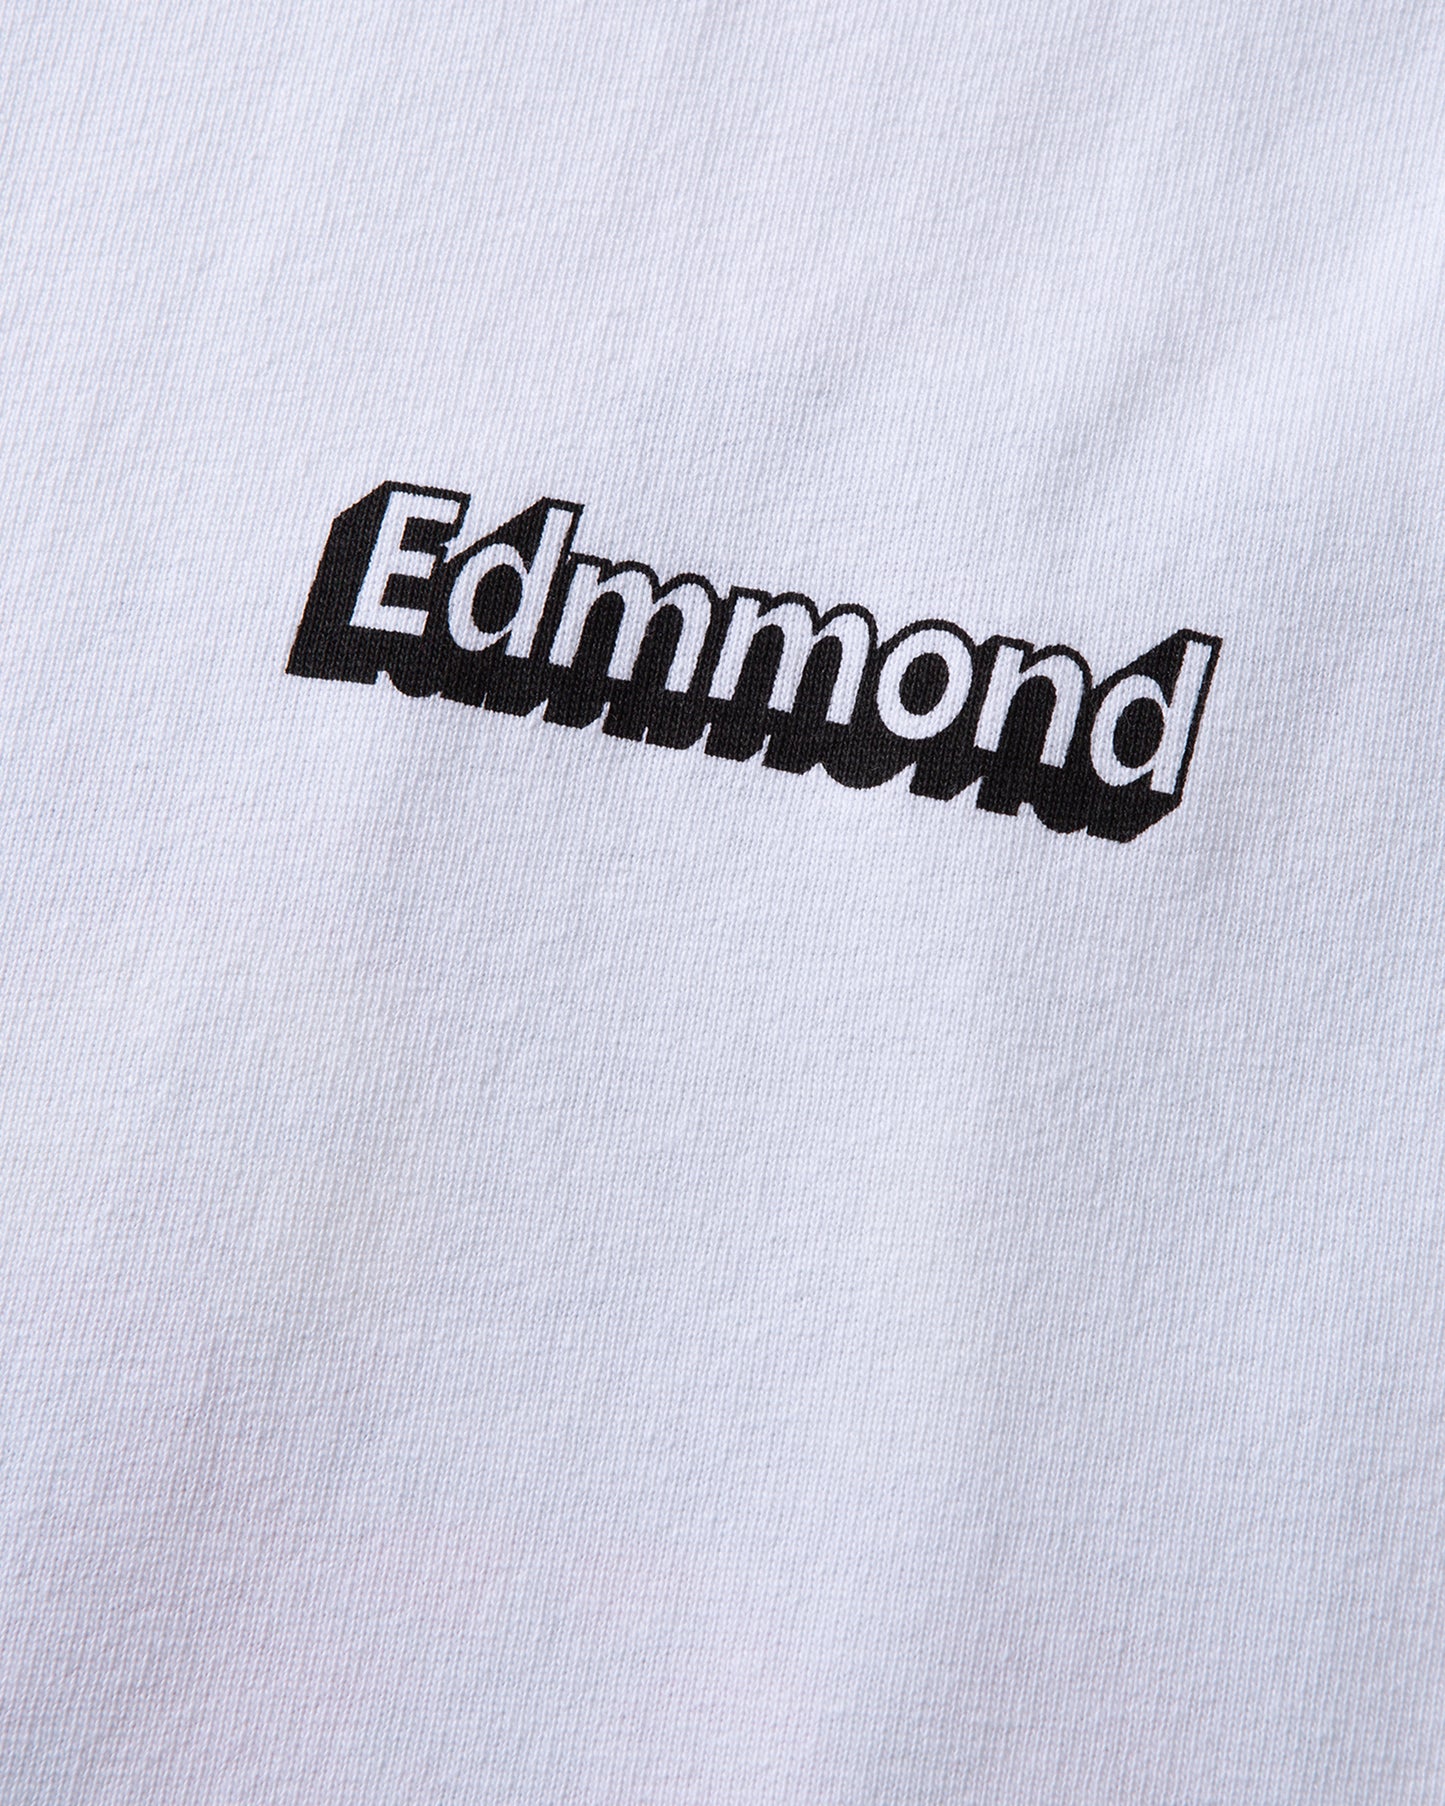 Edmmond Studios Pantry